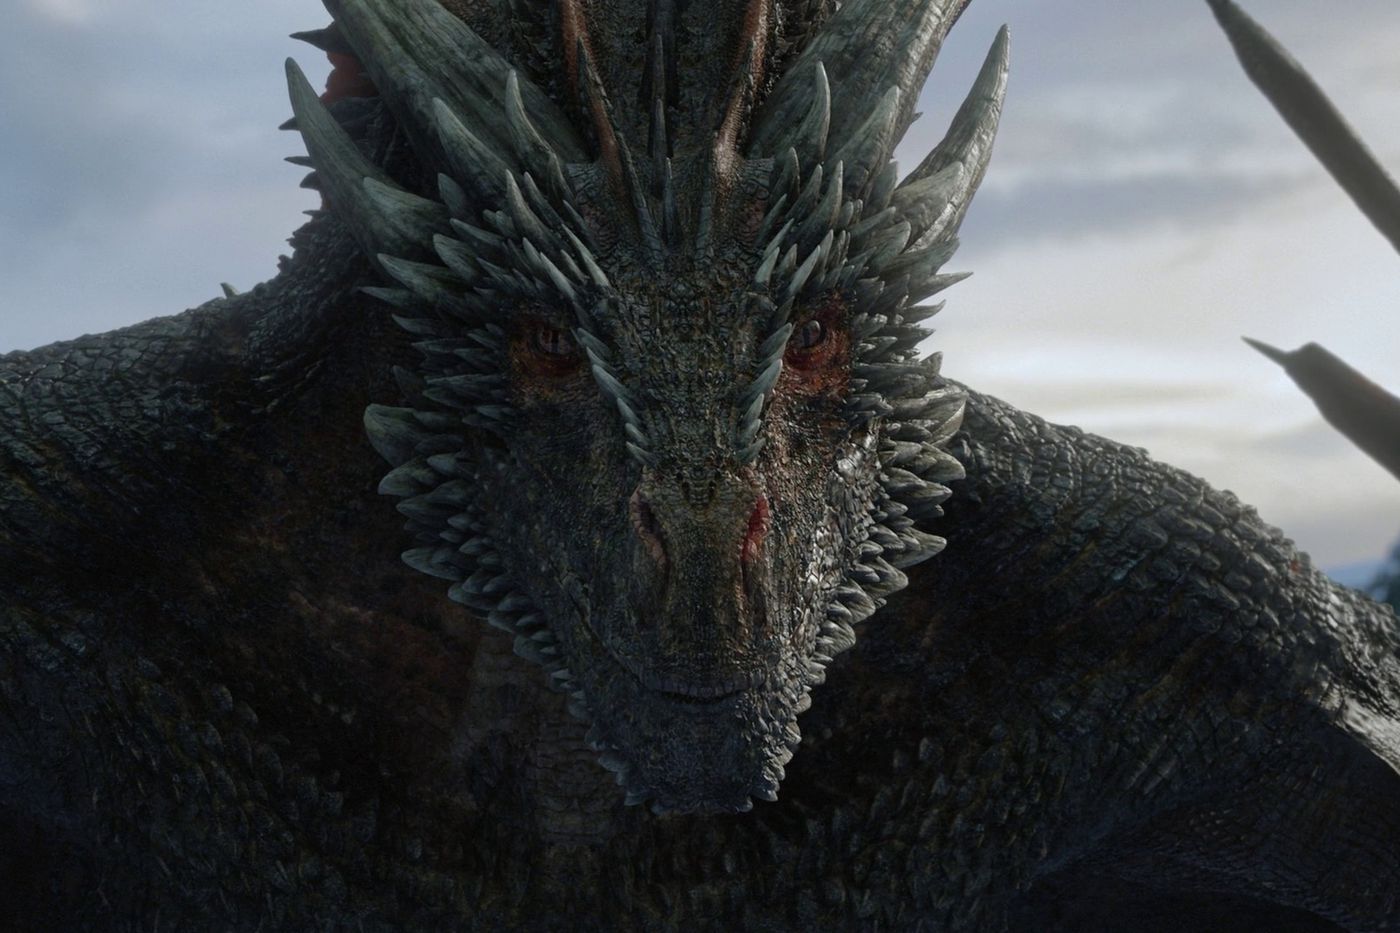 Game Of Thrones Season 8 Jon Snow And Daenerys Targaryen In Winterfell Episode 1 Image Wallpapers